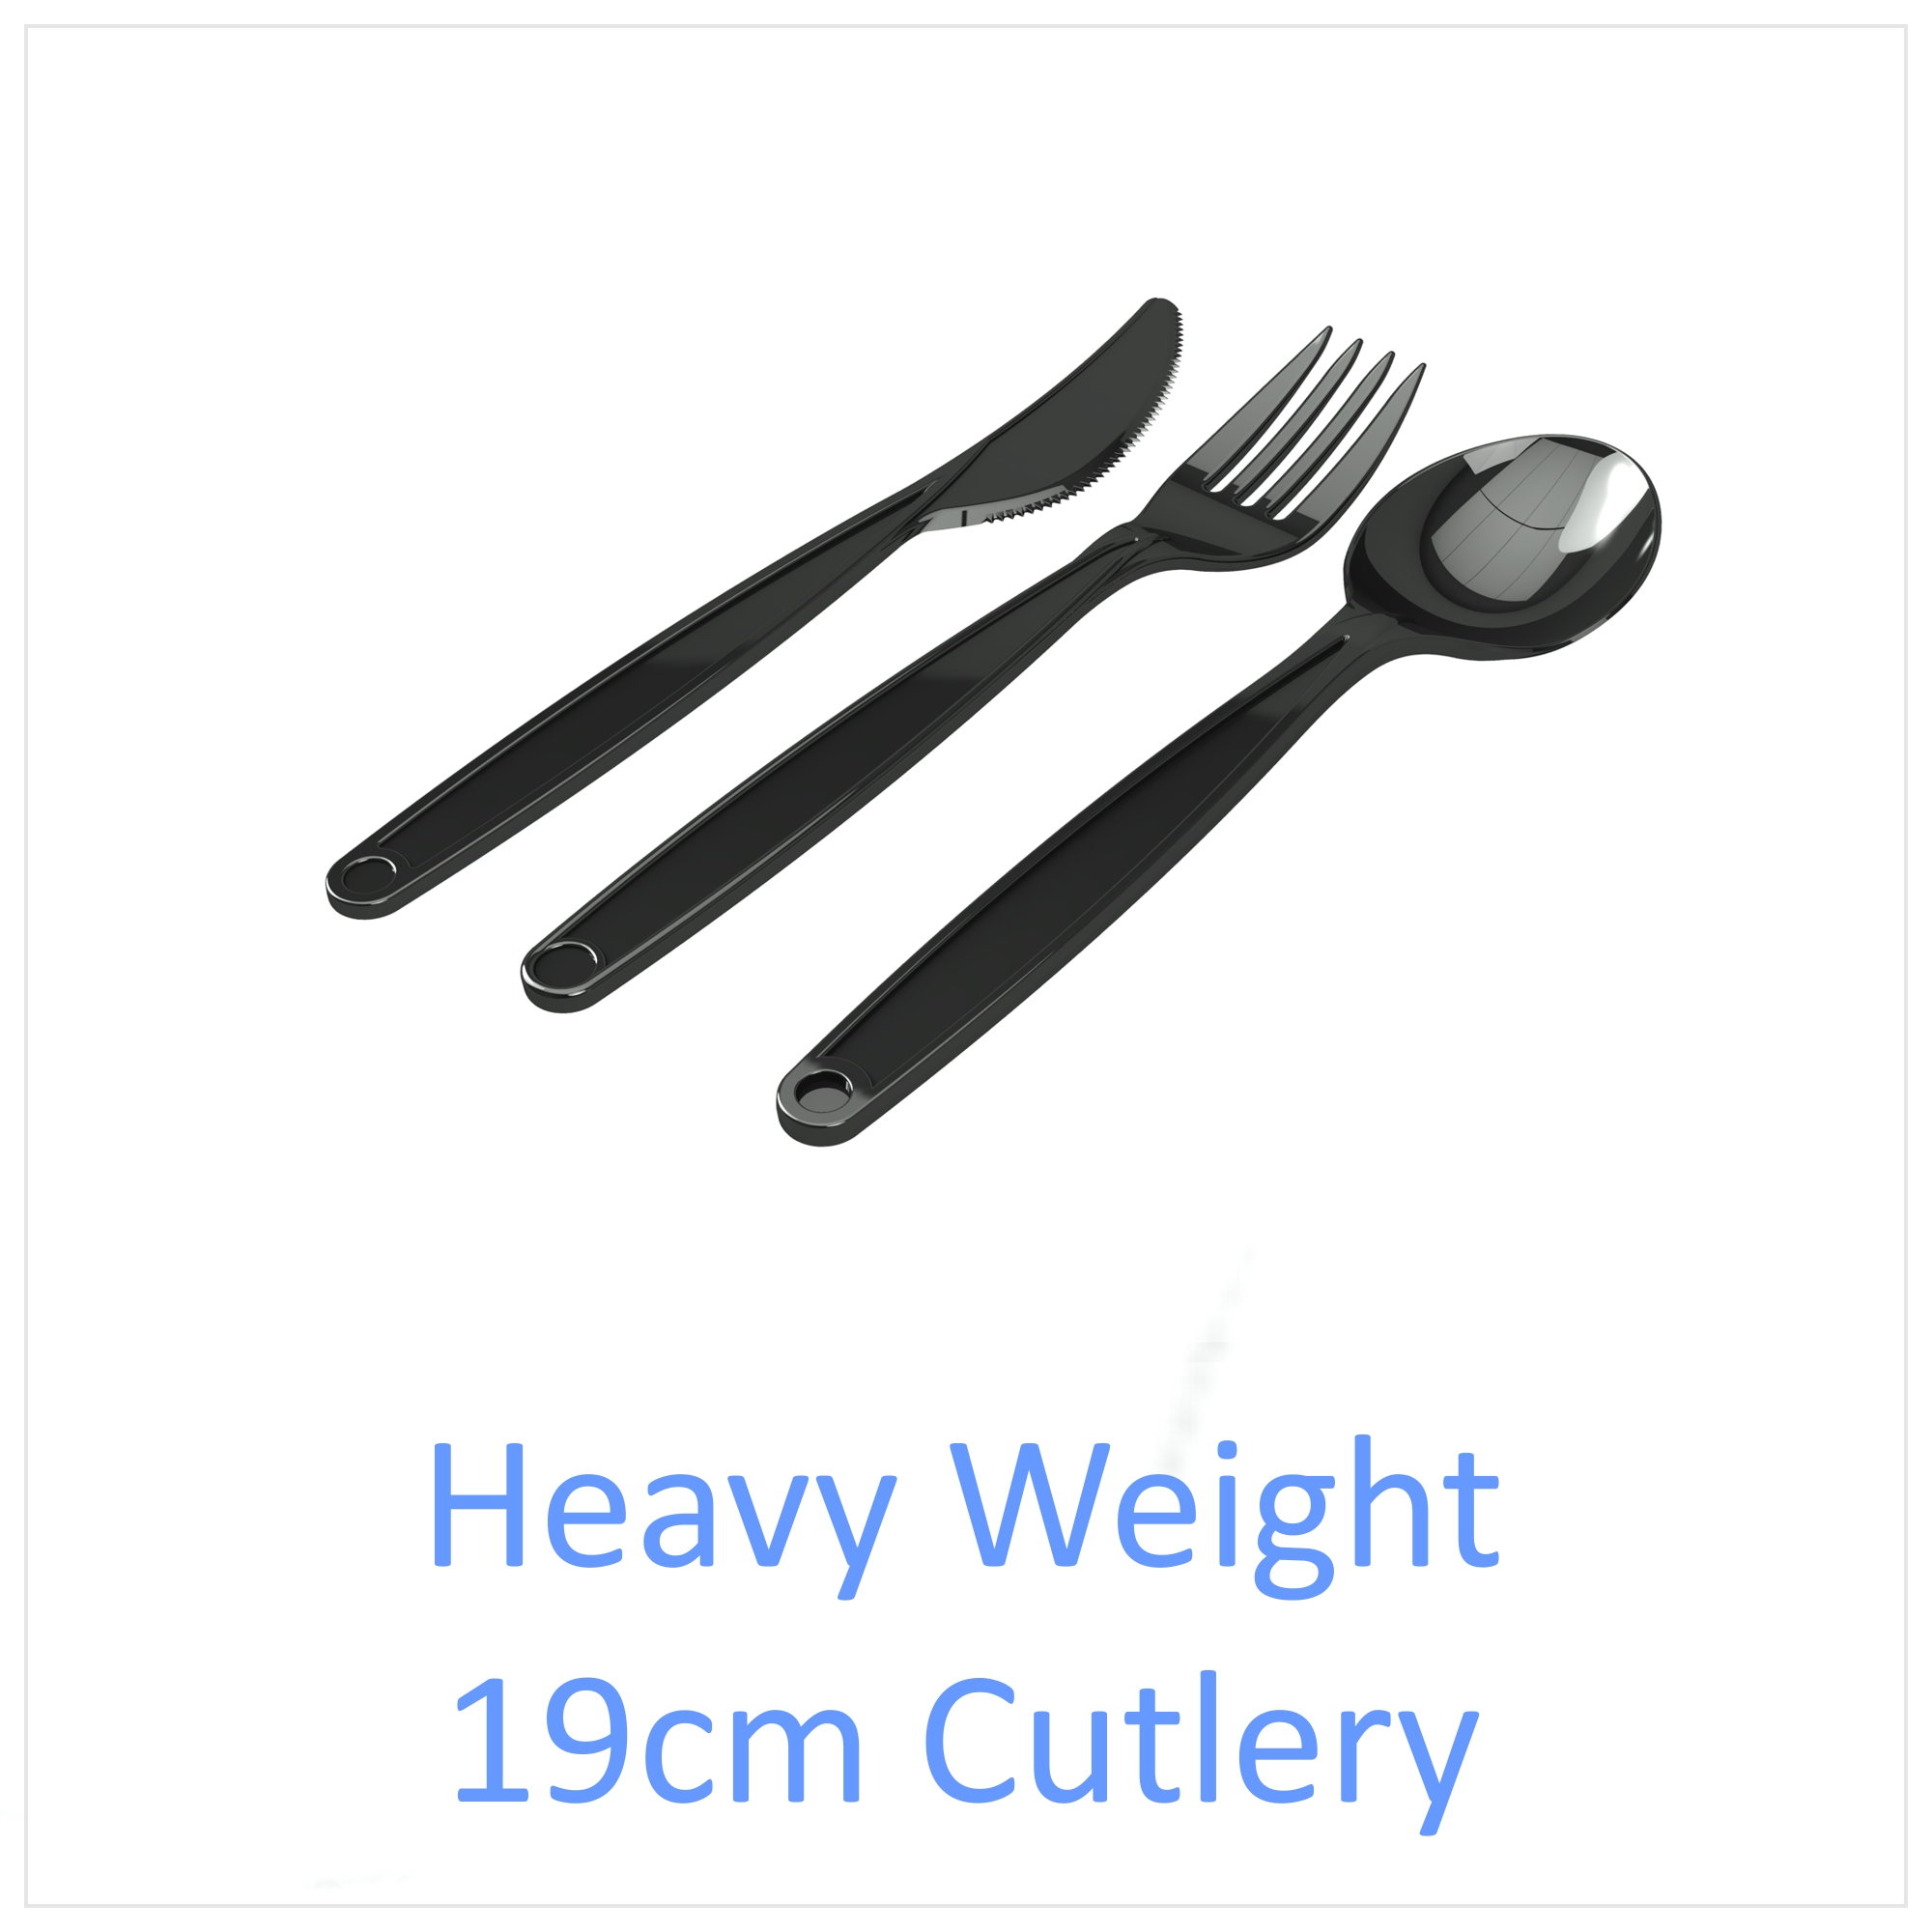 Heavy Weight Cutlery